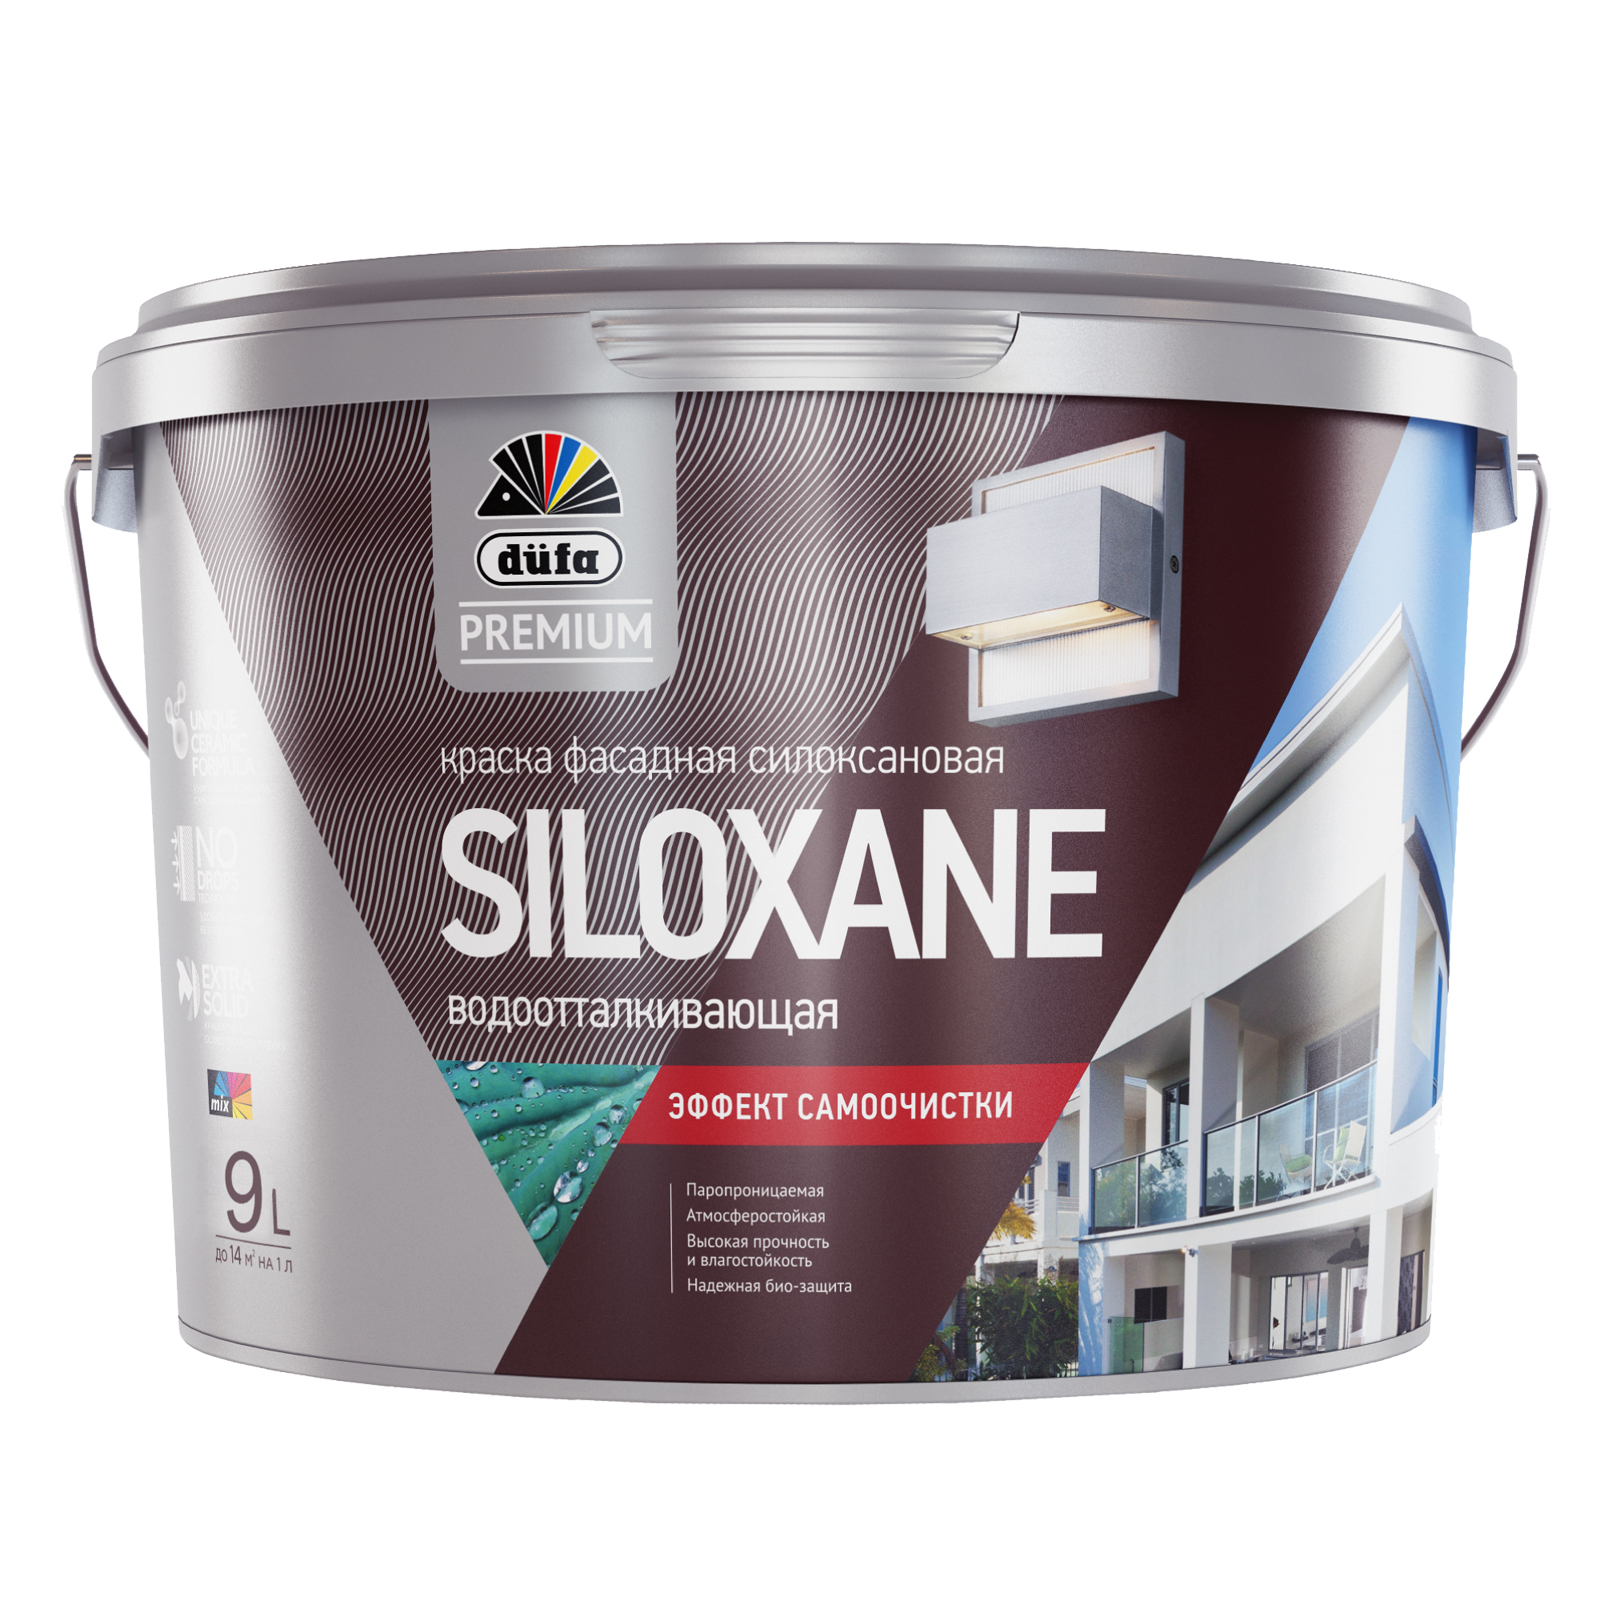 Краска Dufa Premium Siloxane водно-дисперсионная, фасадная, силоксановая, база 1, 9 л